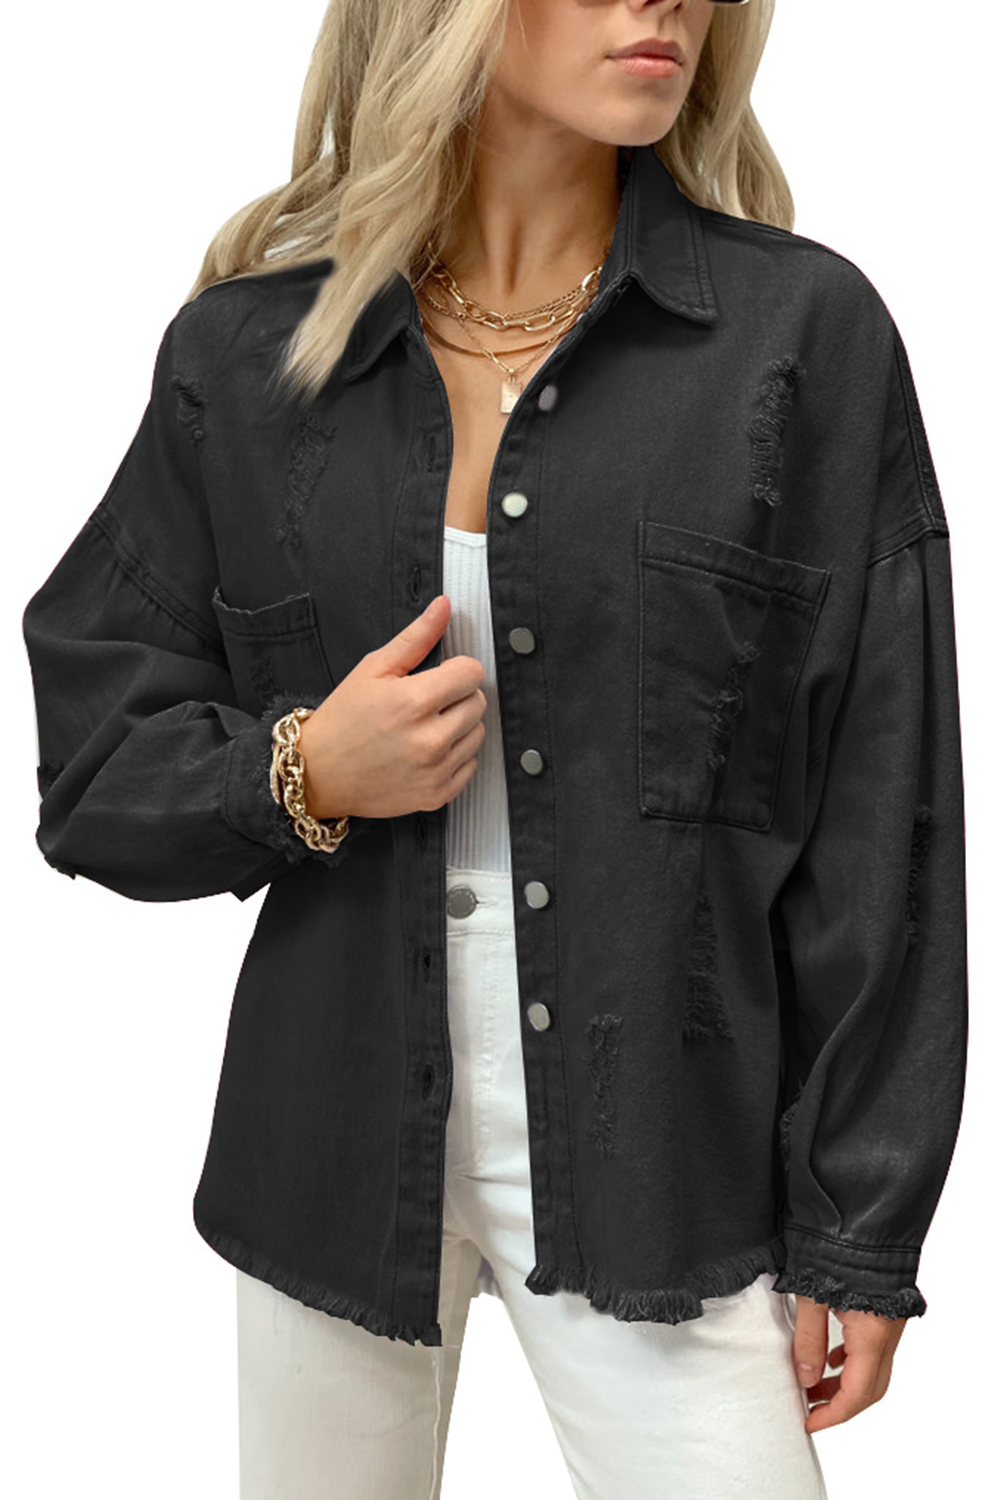 $14.3 Black Distressed Fringe Trim Denim Jacket Wholesale